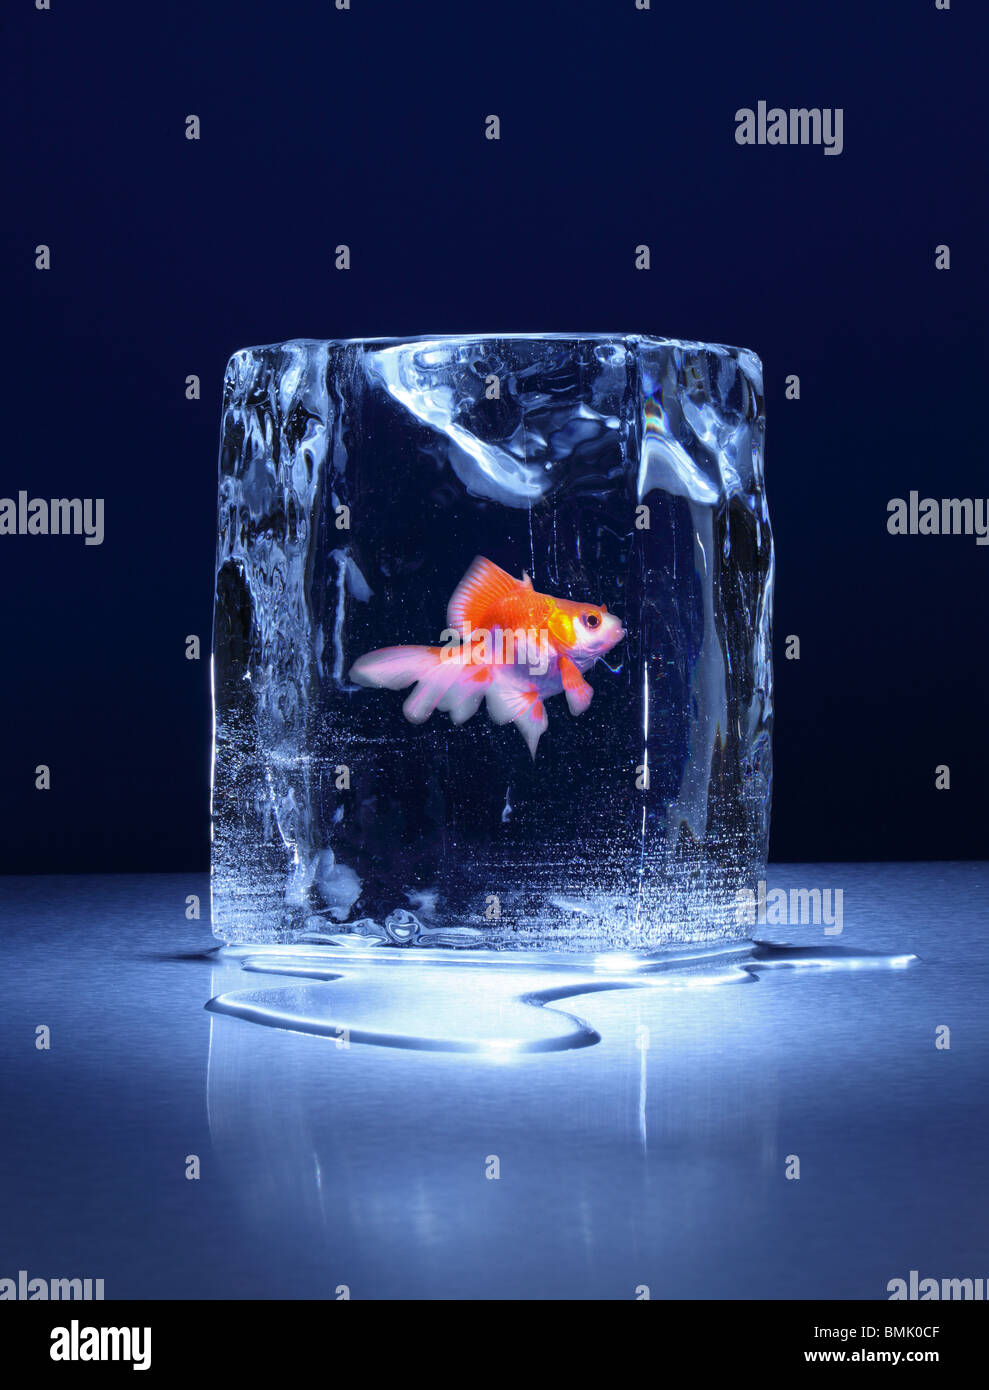 https://c8.alamy.com/comp/BMK0CF/a-frozen-block-of-ice-with-a-goldfish-inside-on-a-metal-surface-BMK0CF.jpg